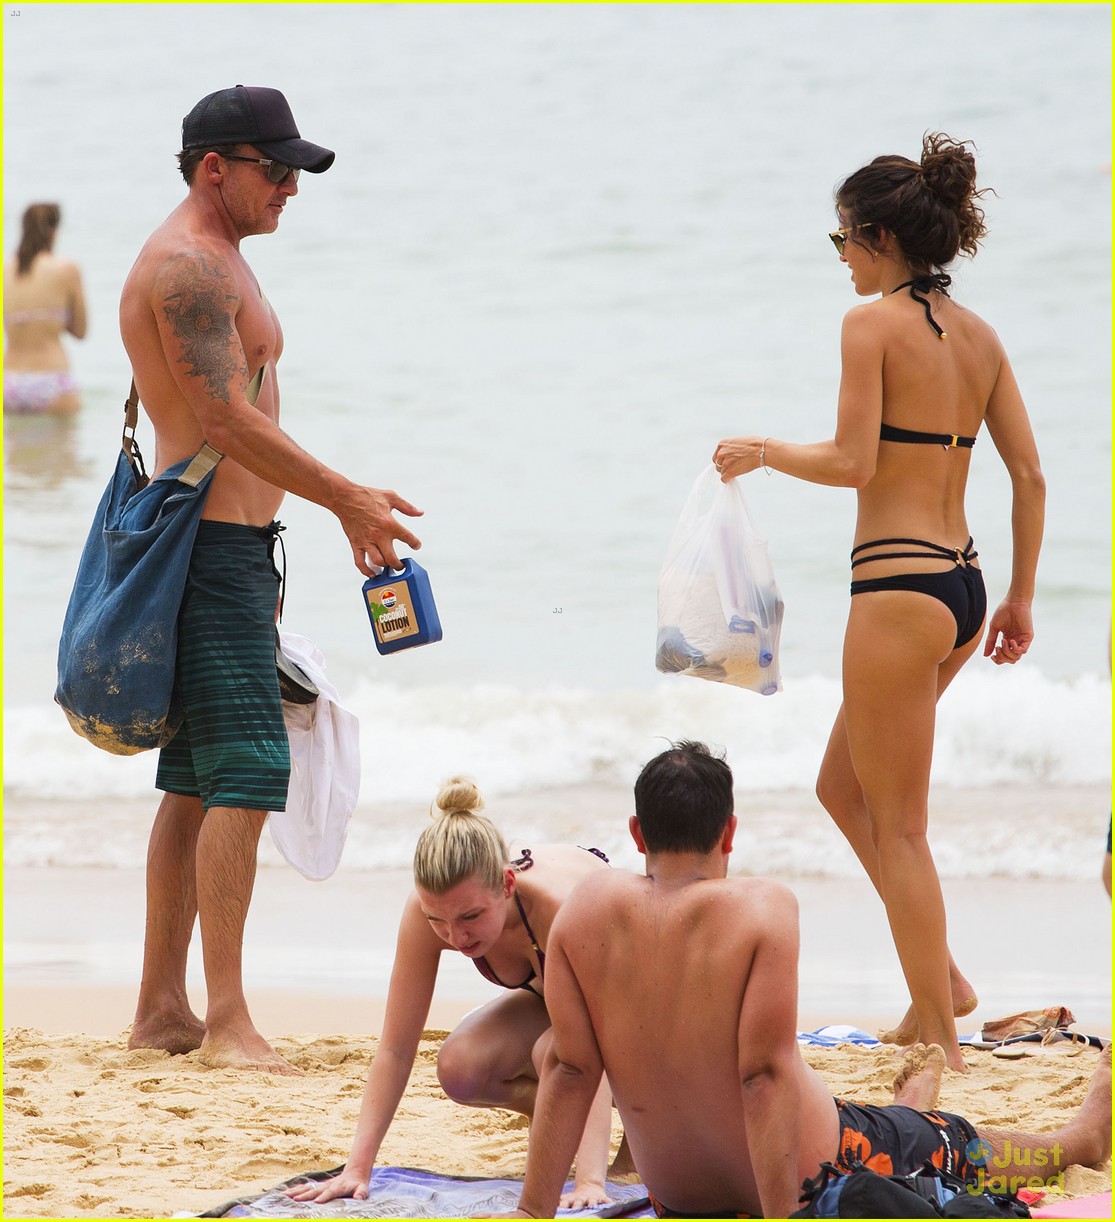 annalynne mccord bikini beach babe with shirtless dominic purcell 22